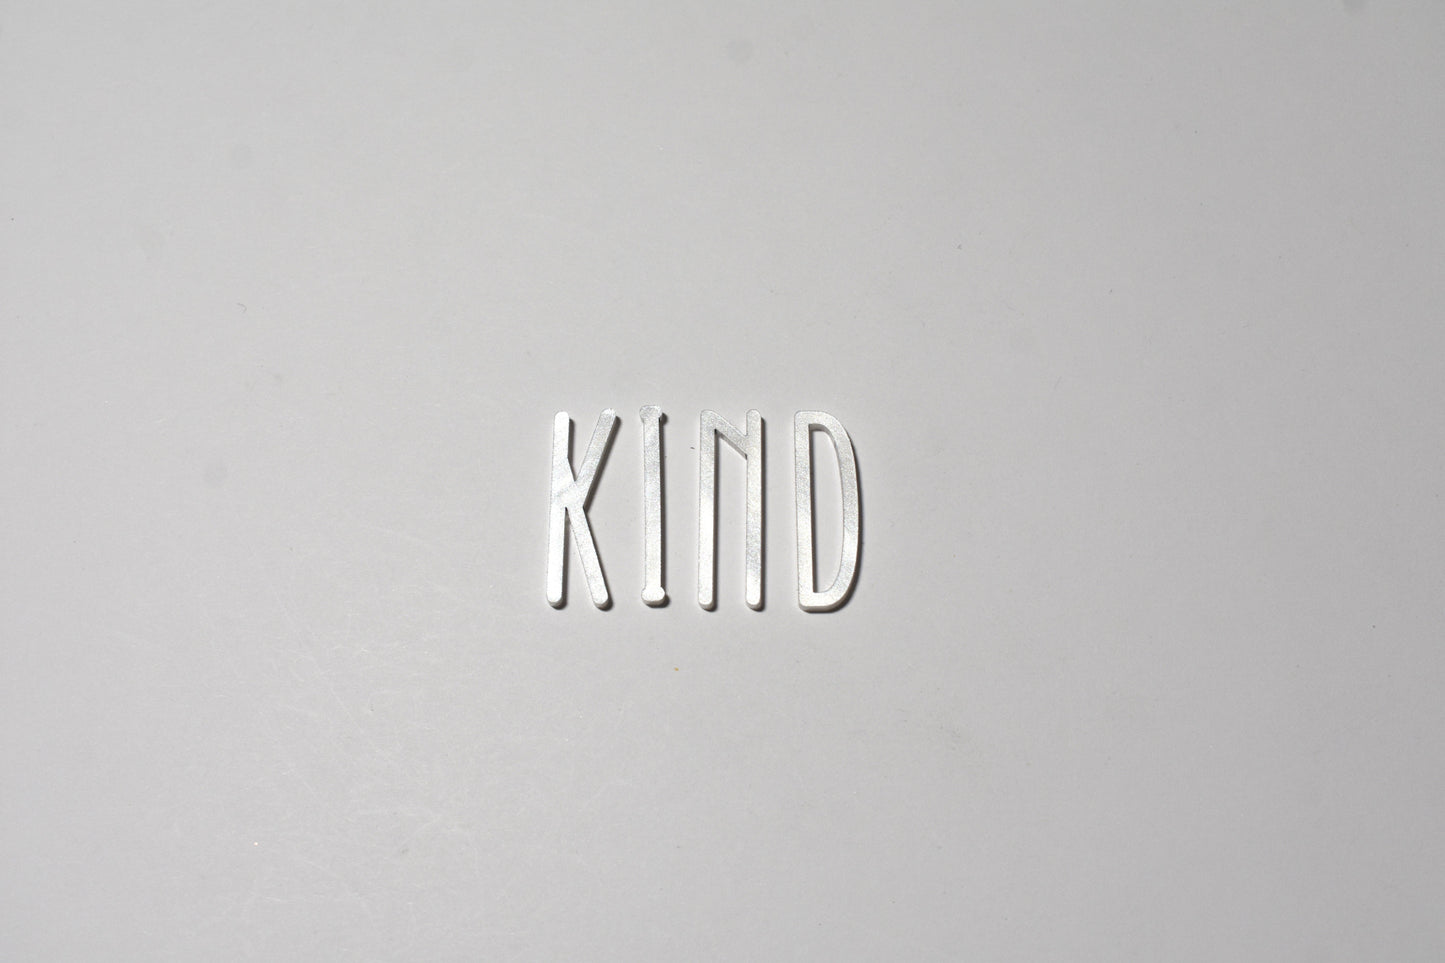 Kind 2 - Creative Designs By Kari